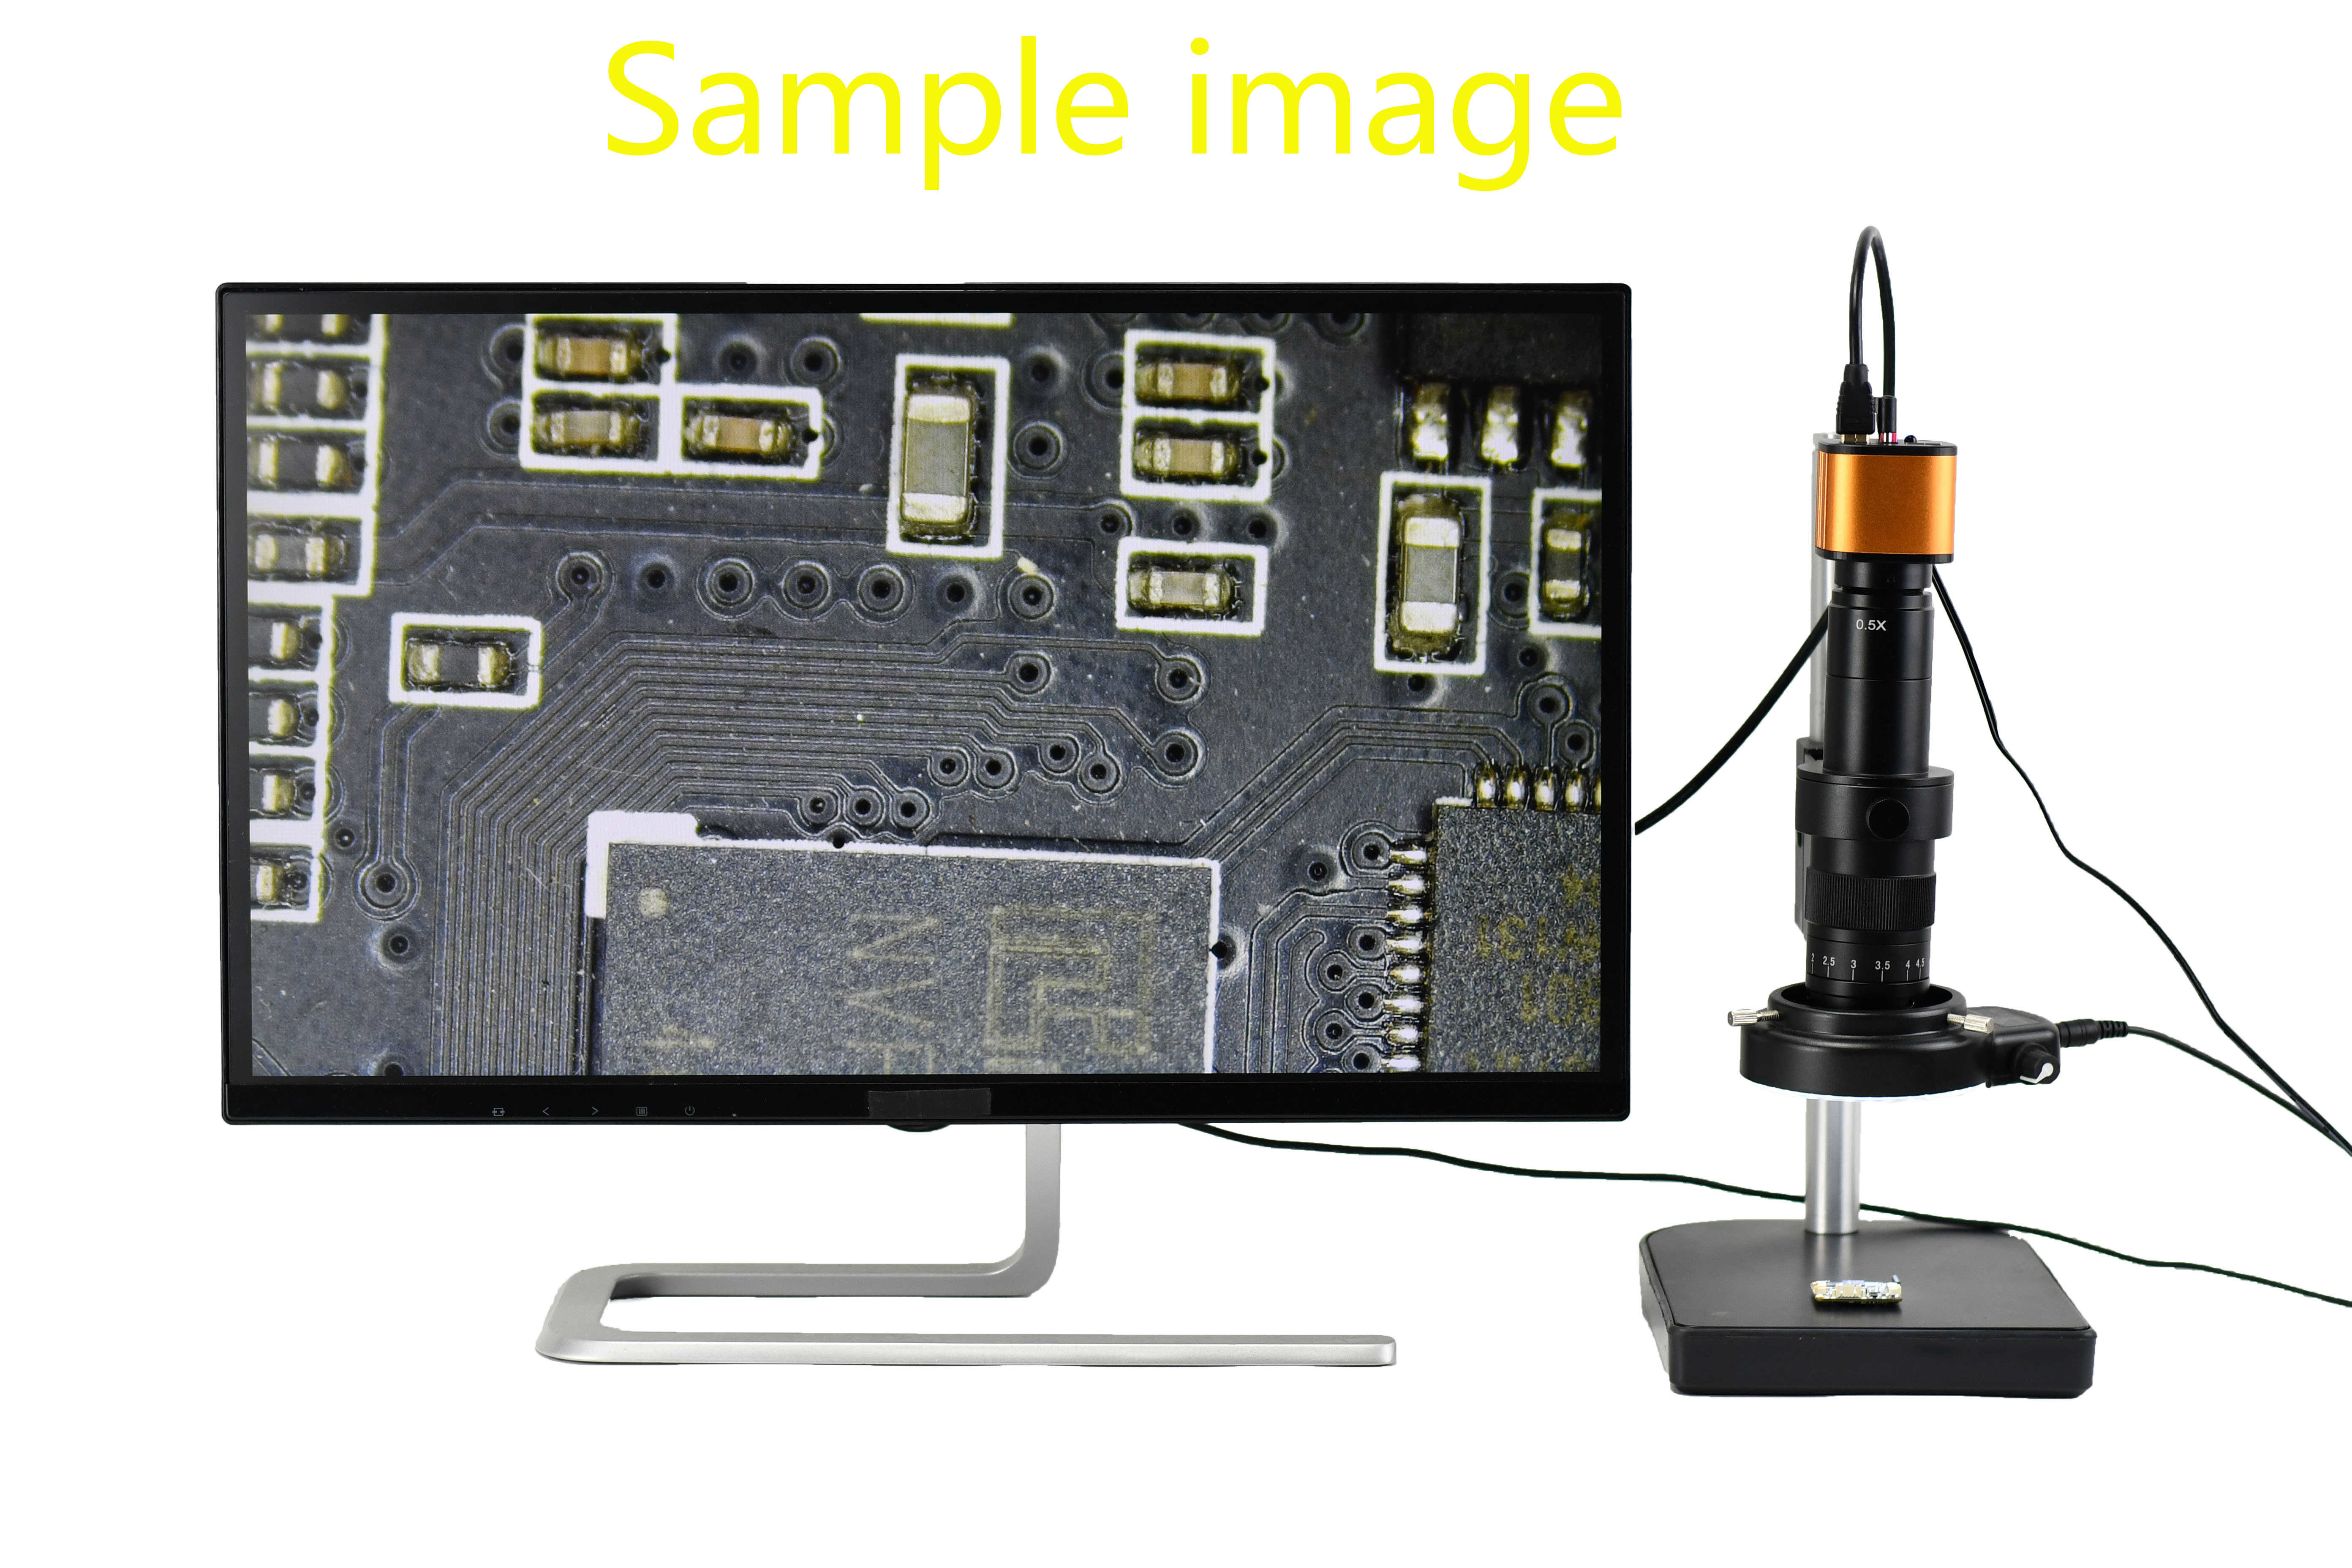 HAYEAR-MINI-Microscope-16MP-130X-45X-Zoom-USB-Industrial-Electronic-Digital-Video-Soldering-Microsco-1592540-1